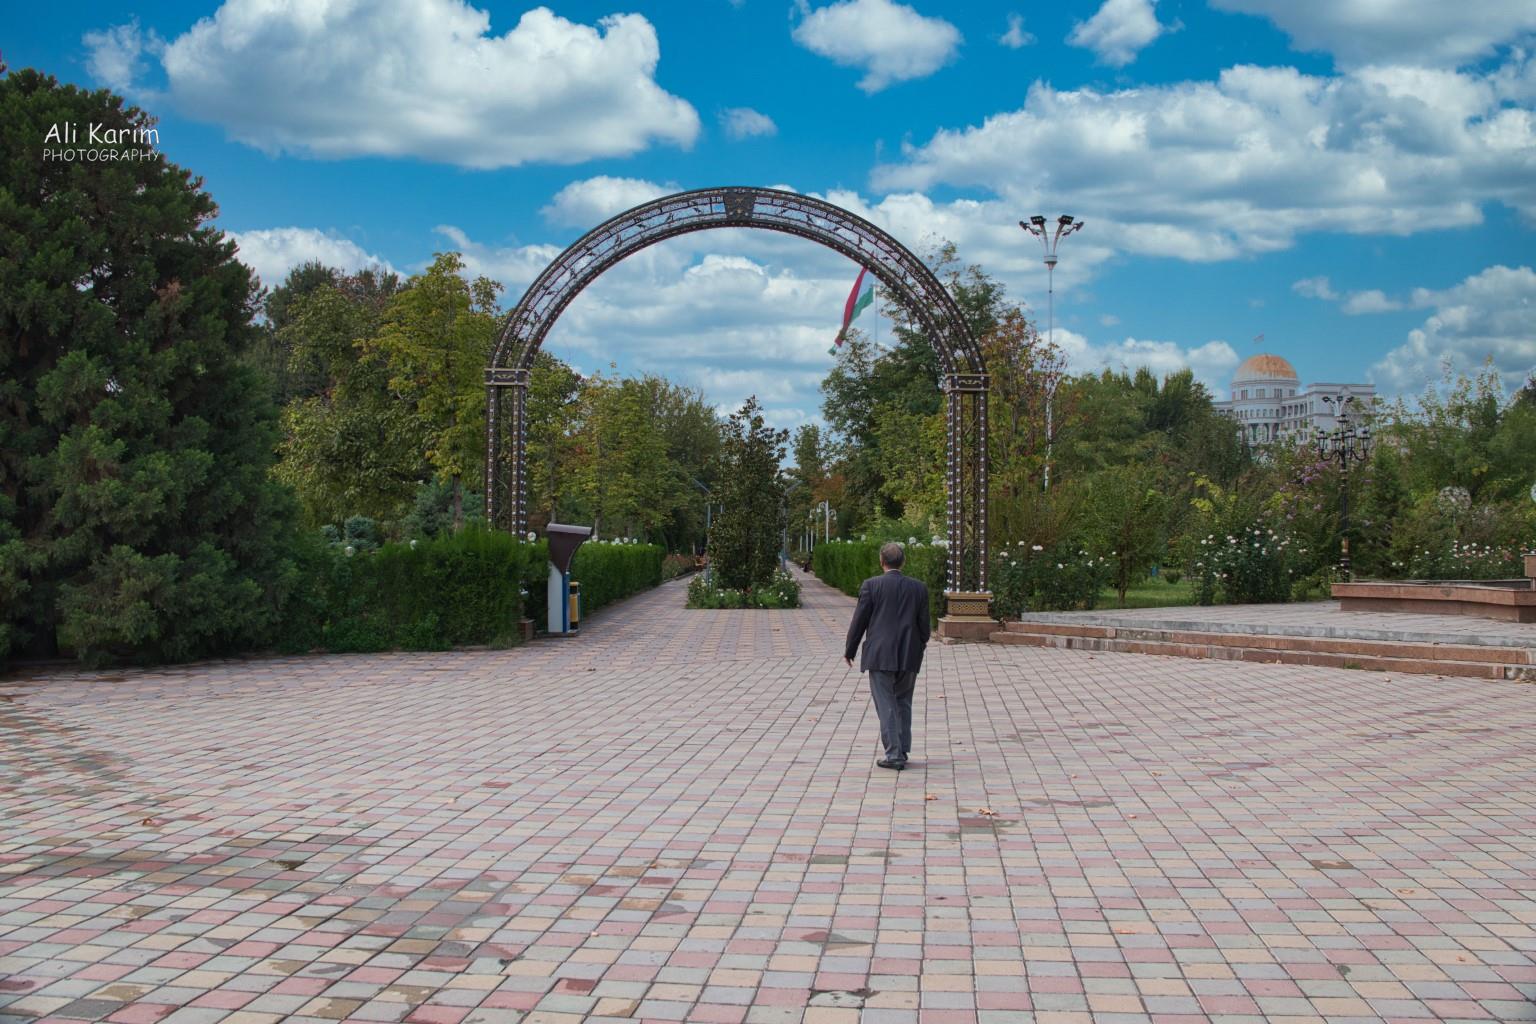 More Dushanbe, Tajikistan Beautiful parks were everywhere, like Rudoki park